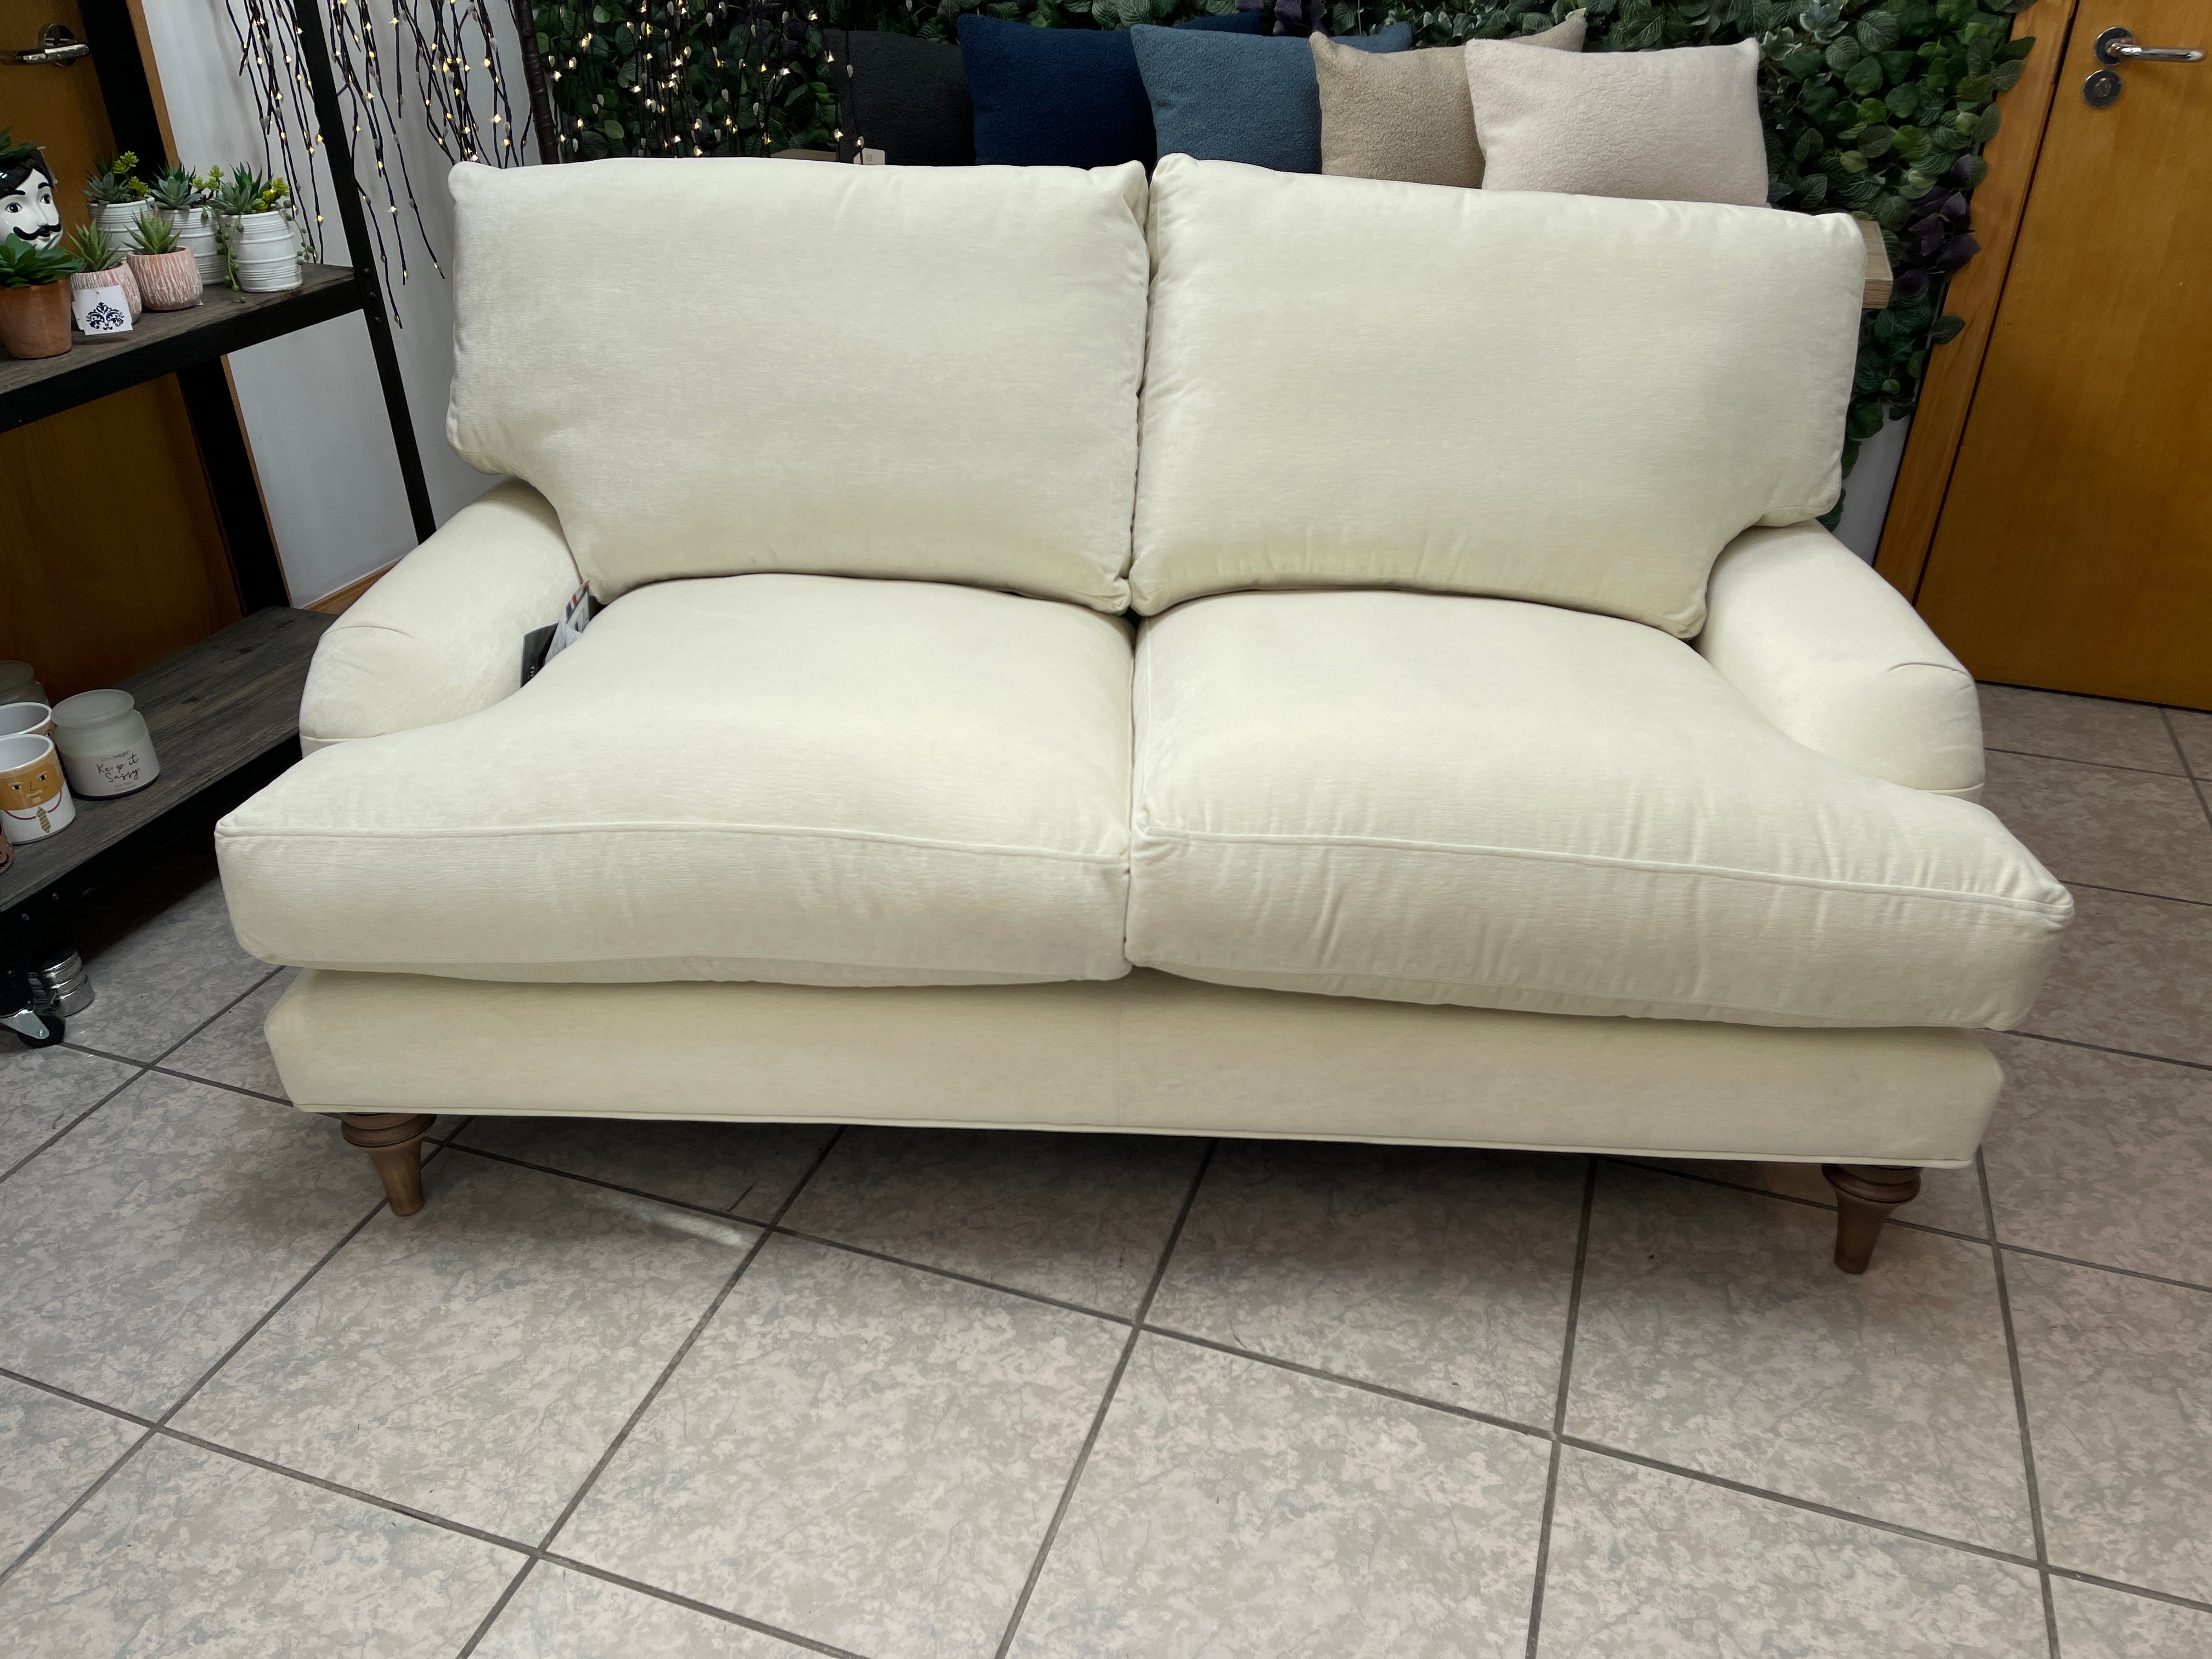 THE LOUNGE COMPANY ROSE 2 seater standard back sofa in French linen velvet